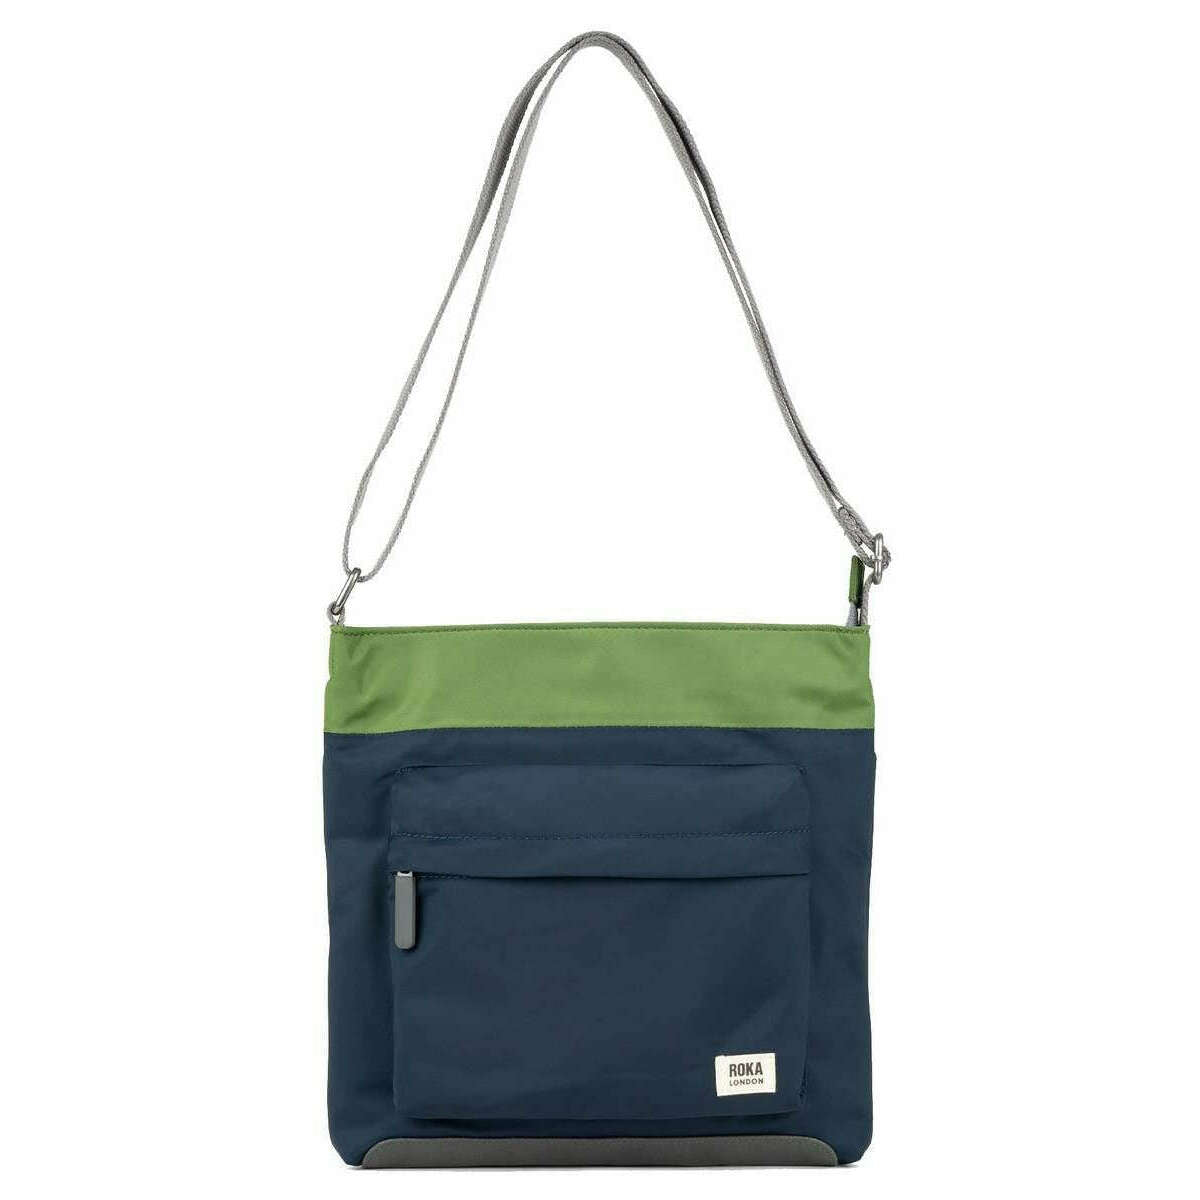 Roka Kennington B Medium Creative Waste Two Tone Recycled Nylon Crossbody Bag - Midnight Blue/Avocado Green